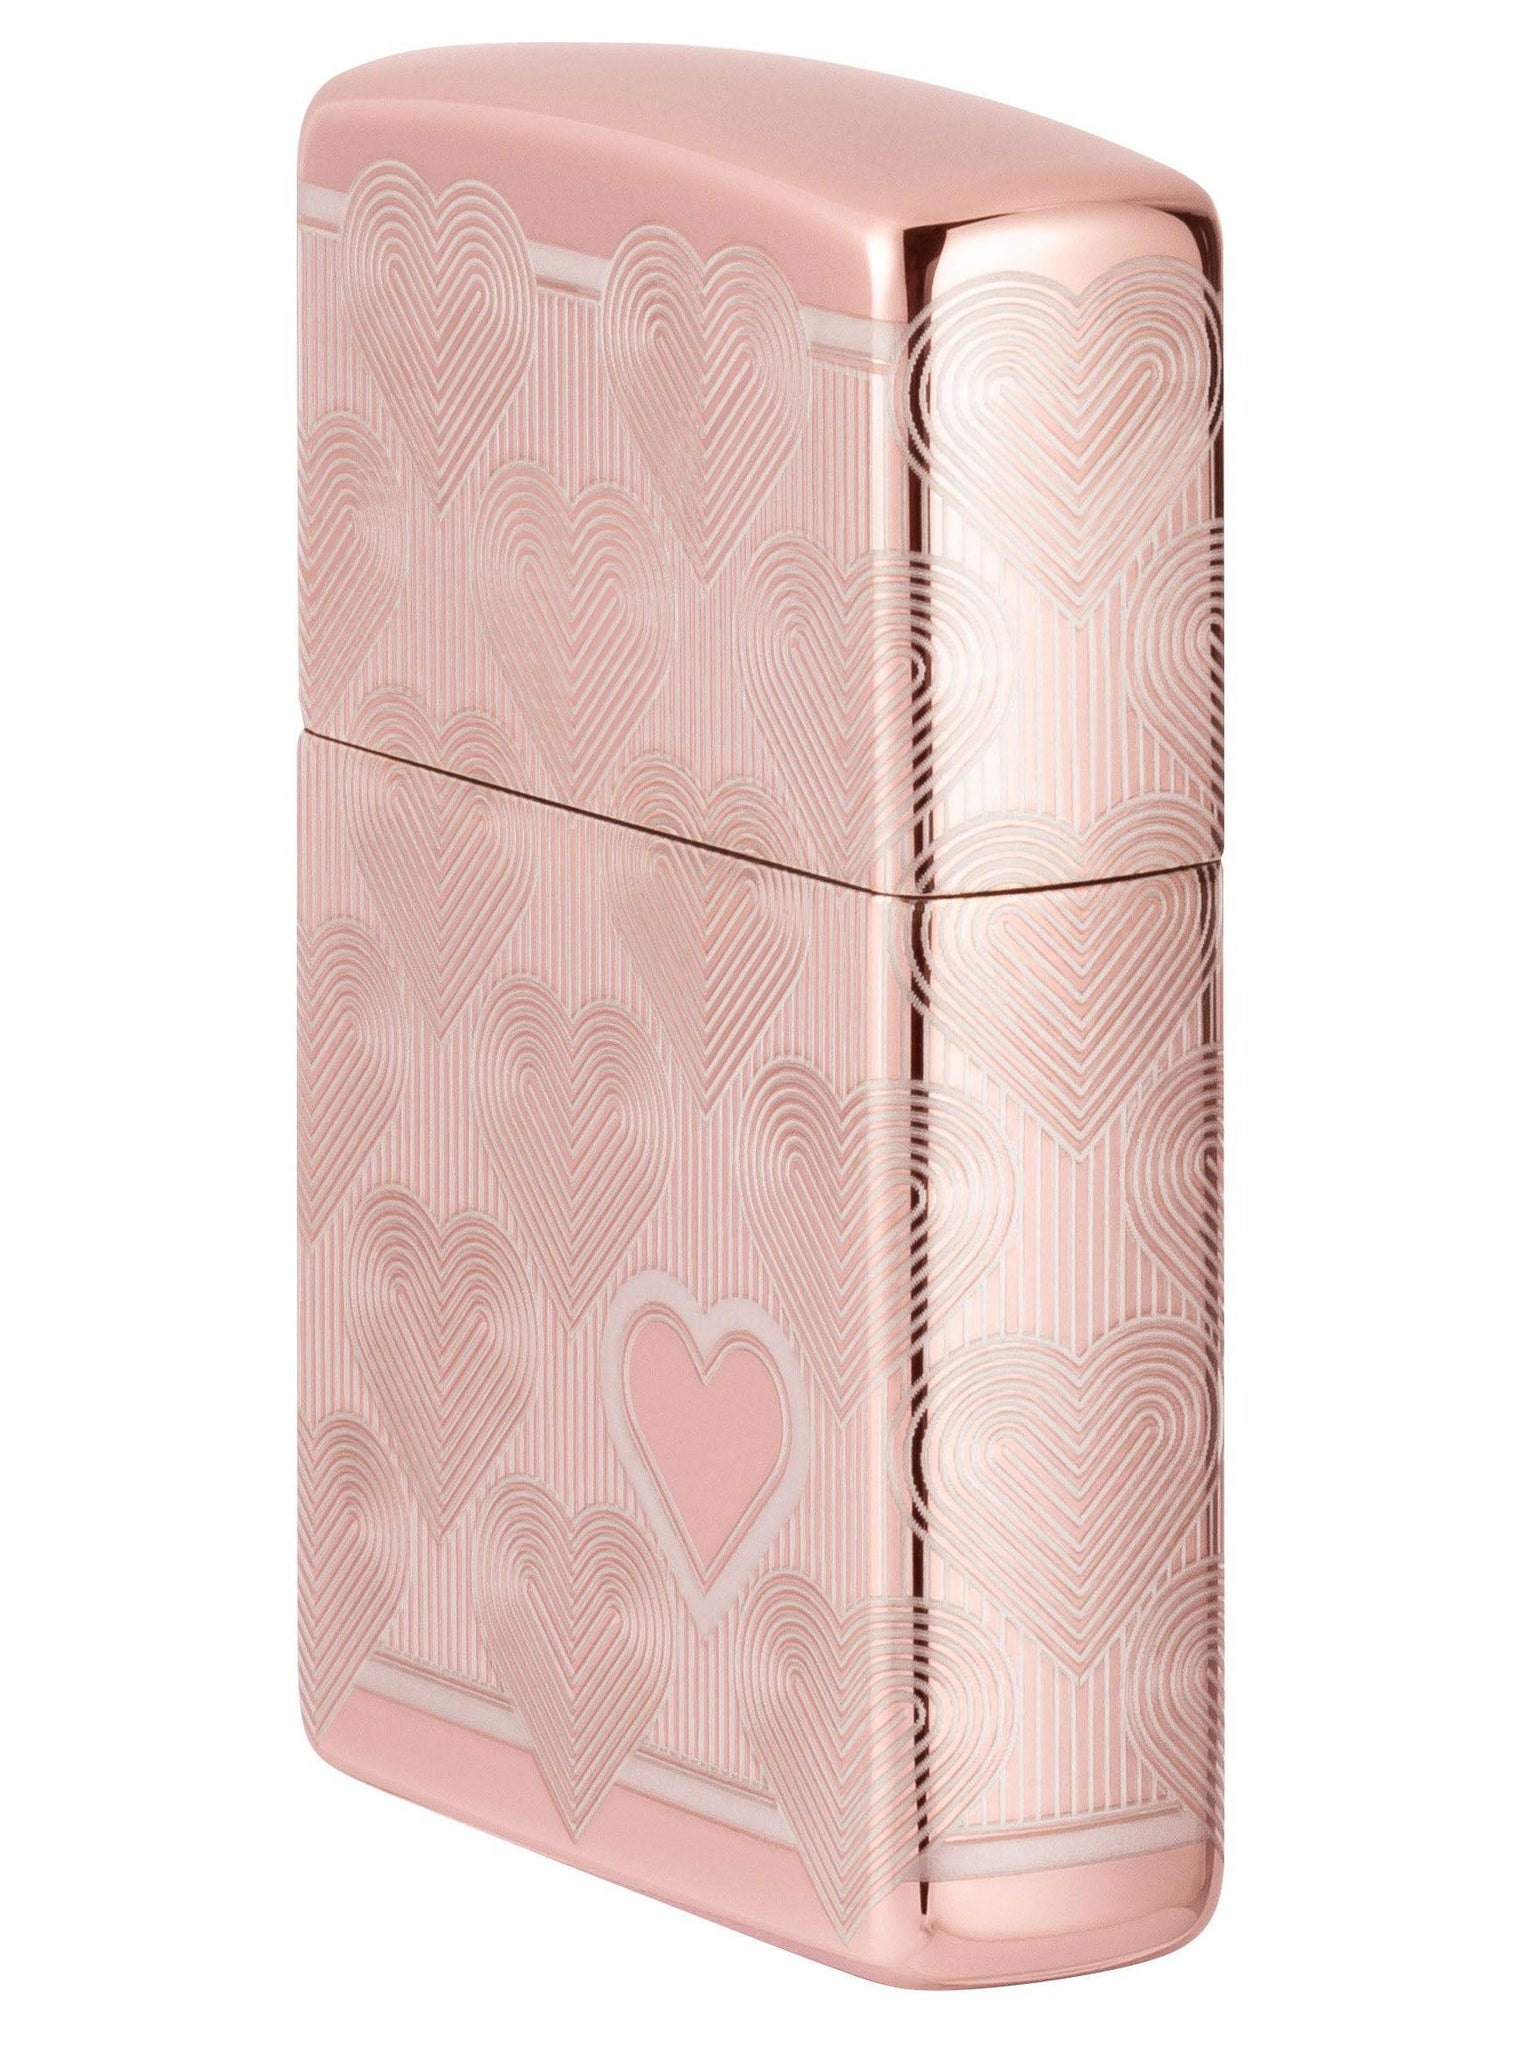 Zippo Lighter: Engraved Hearts, Laser 360 - High Polish Rose Gold 49811